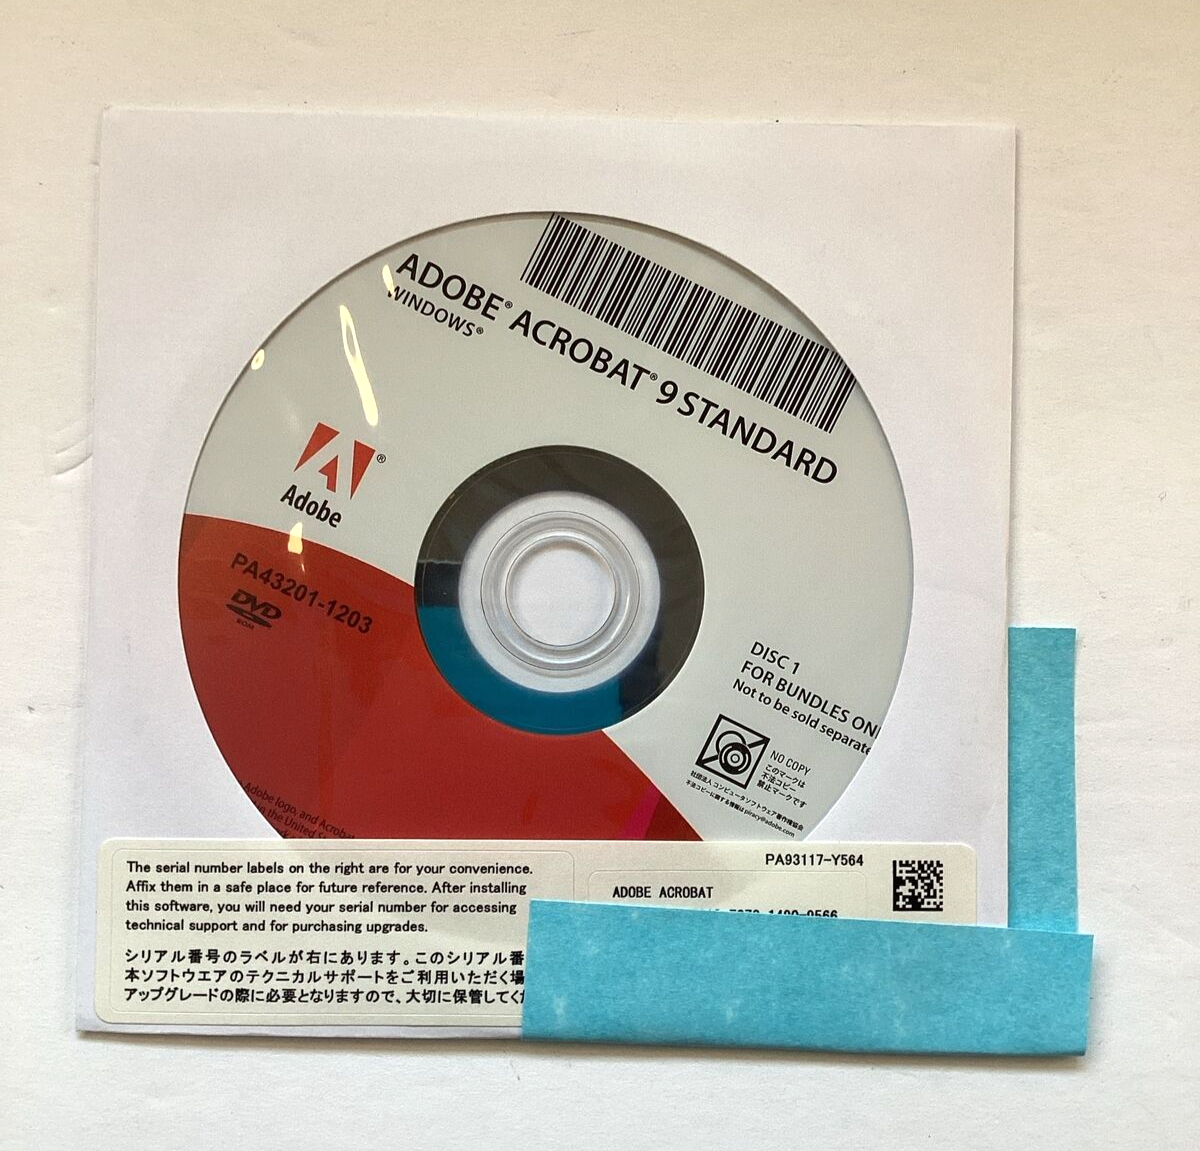 Adobe Acrobat 9 Standard CD With Key/Serial Number - See Photos - $34.64